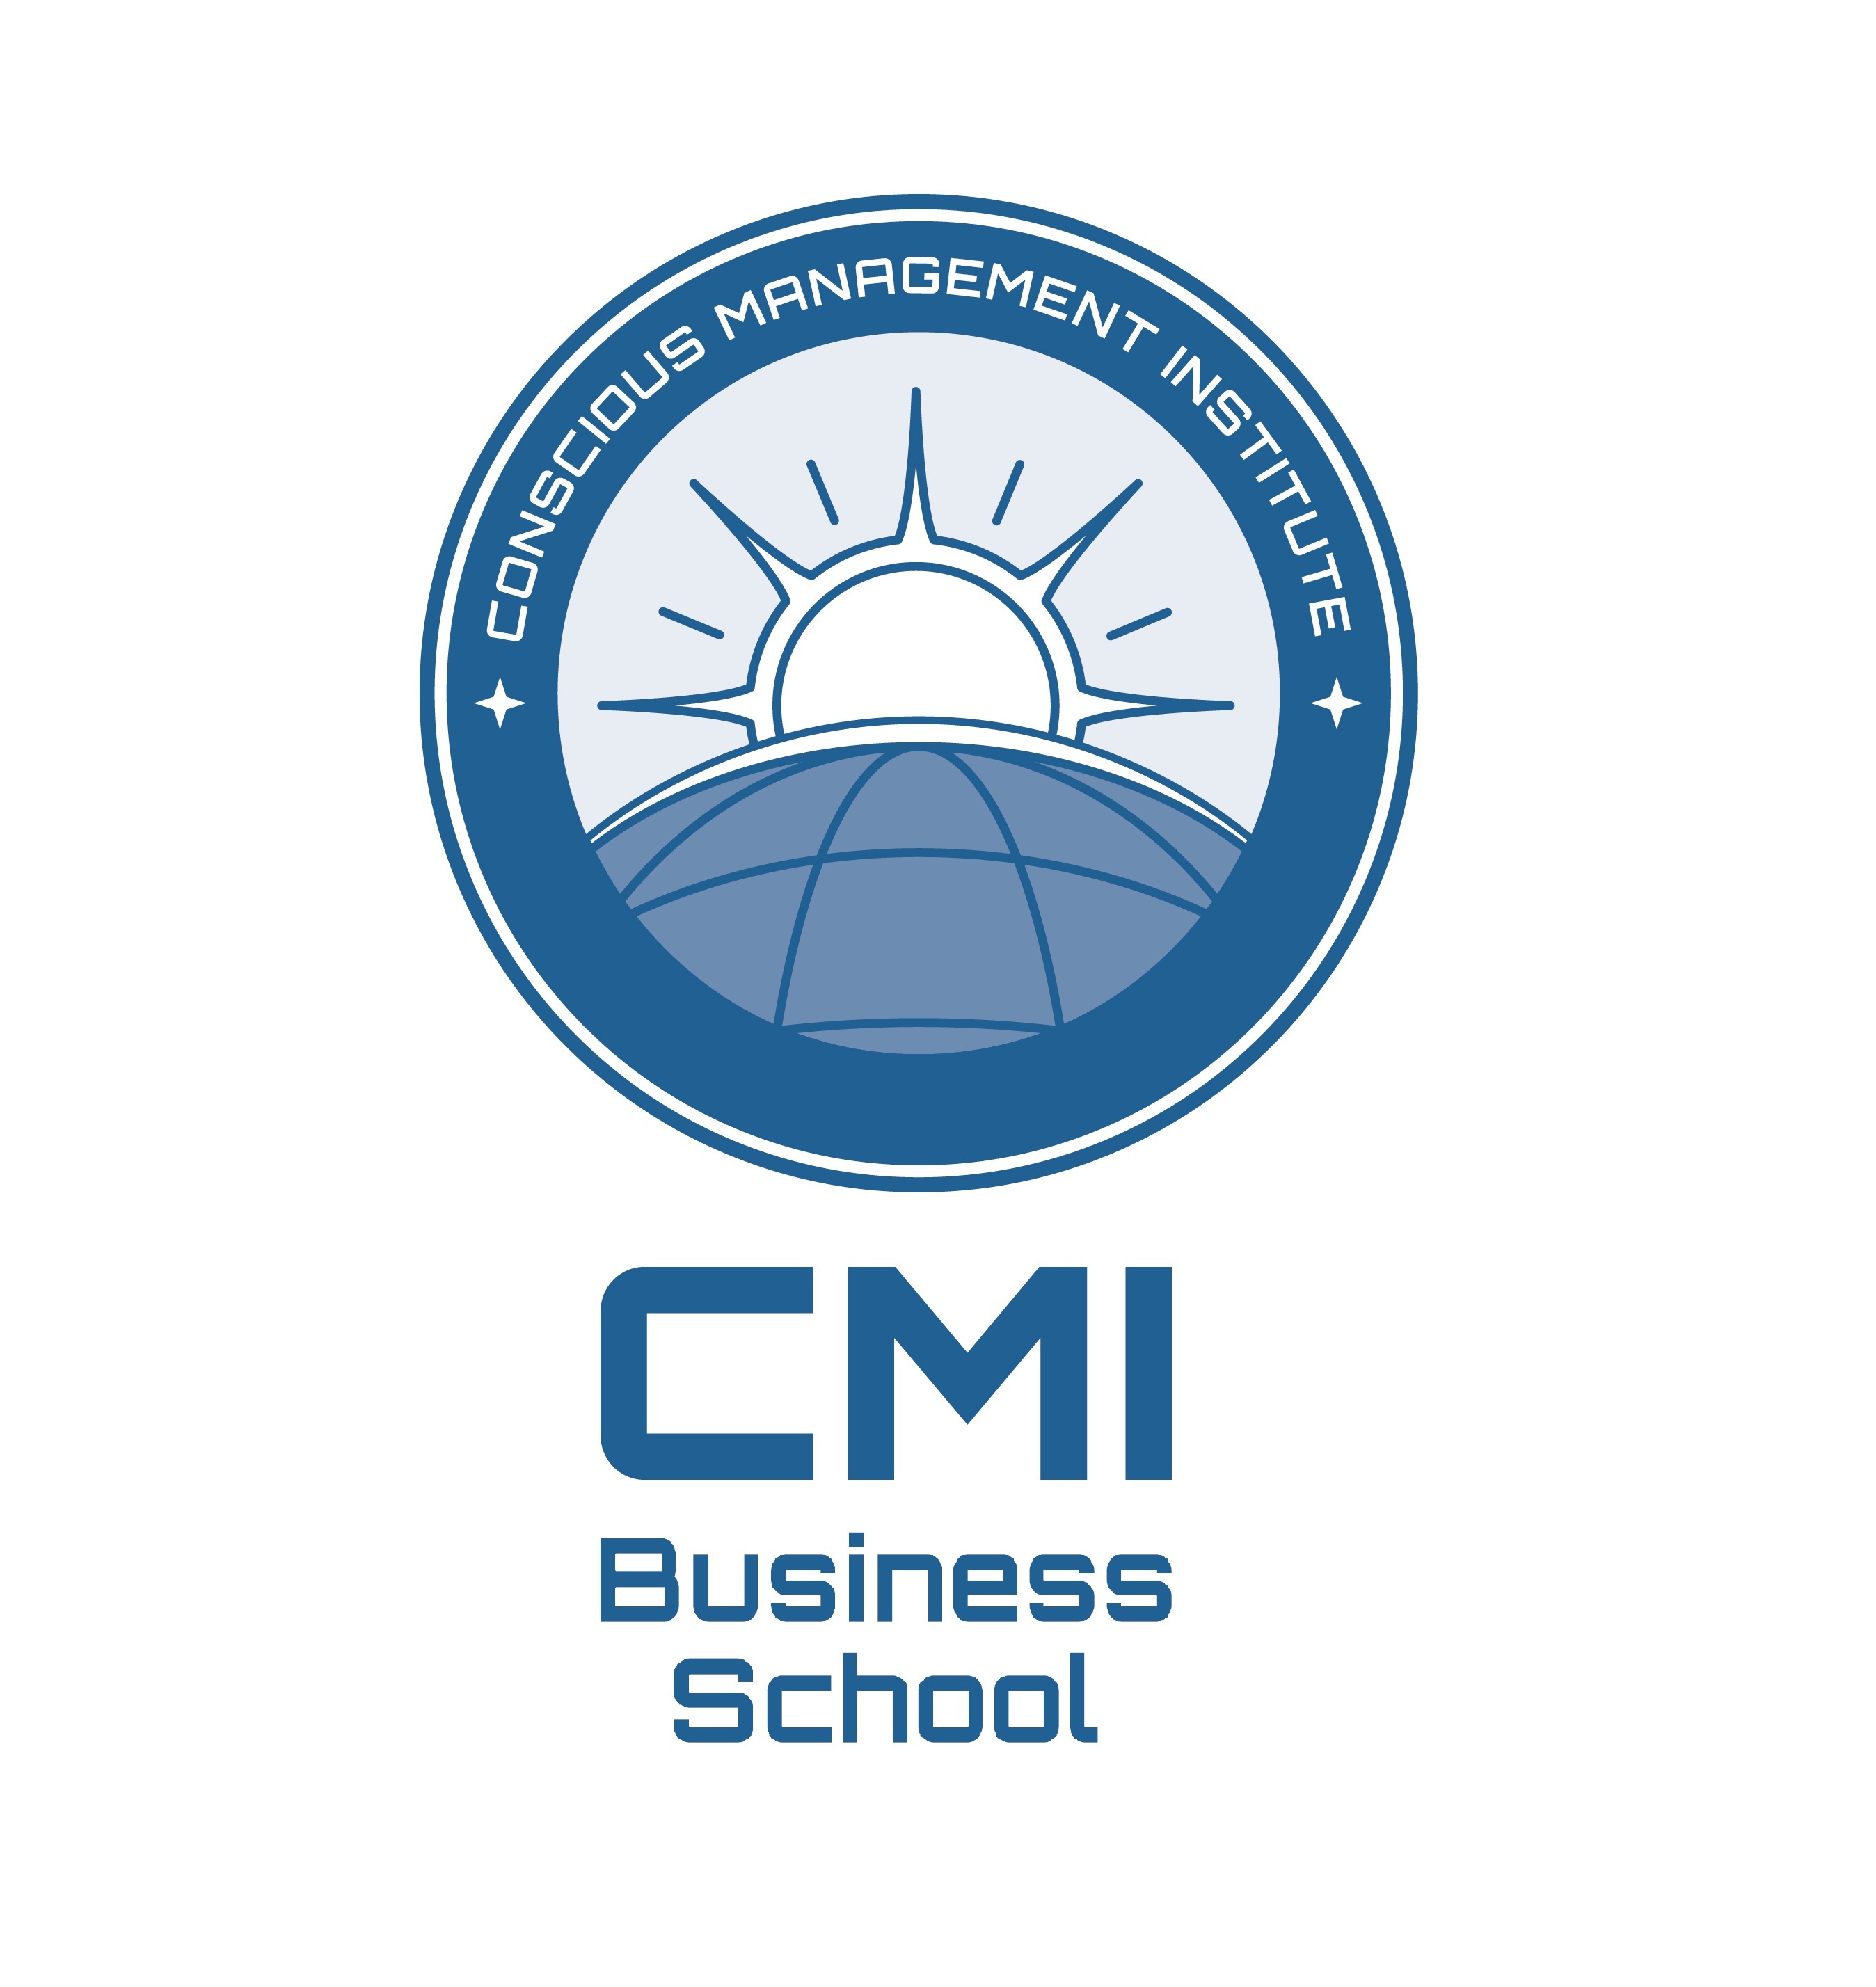 CMI-Businesss-School-negocio-responsable